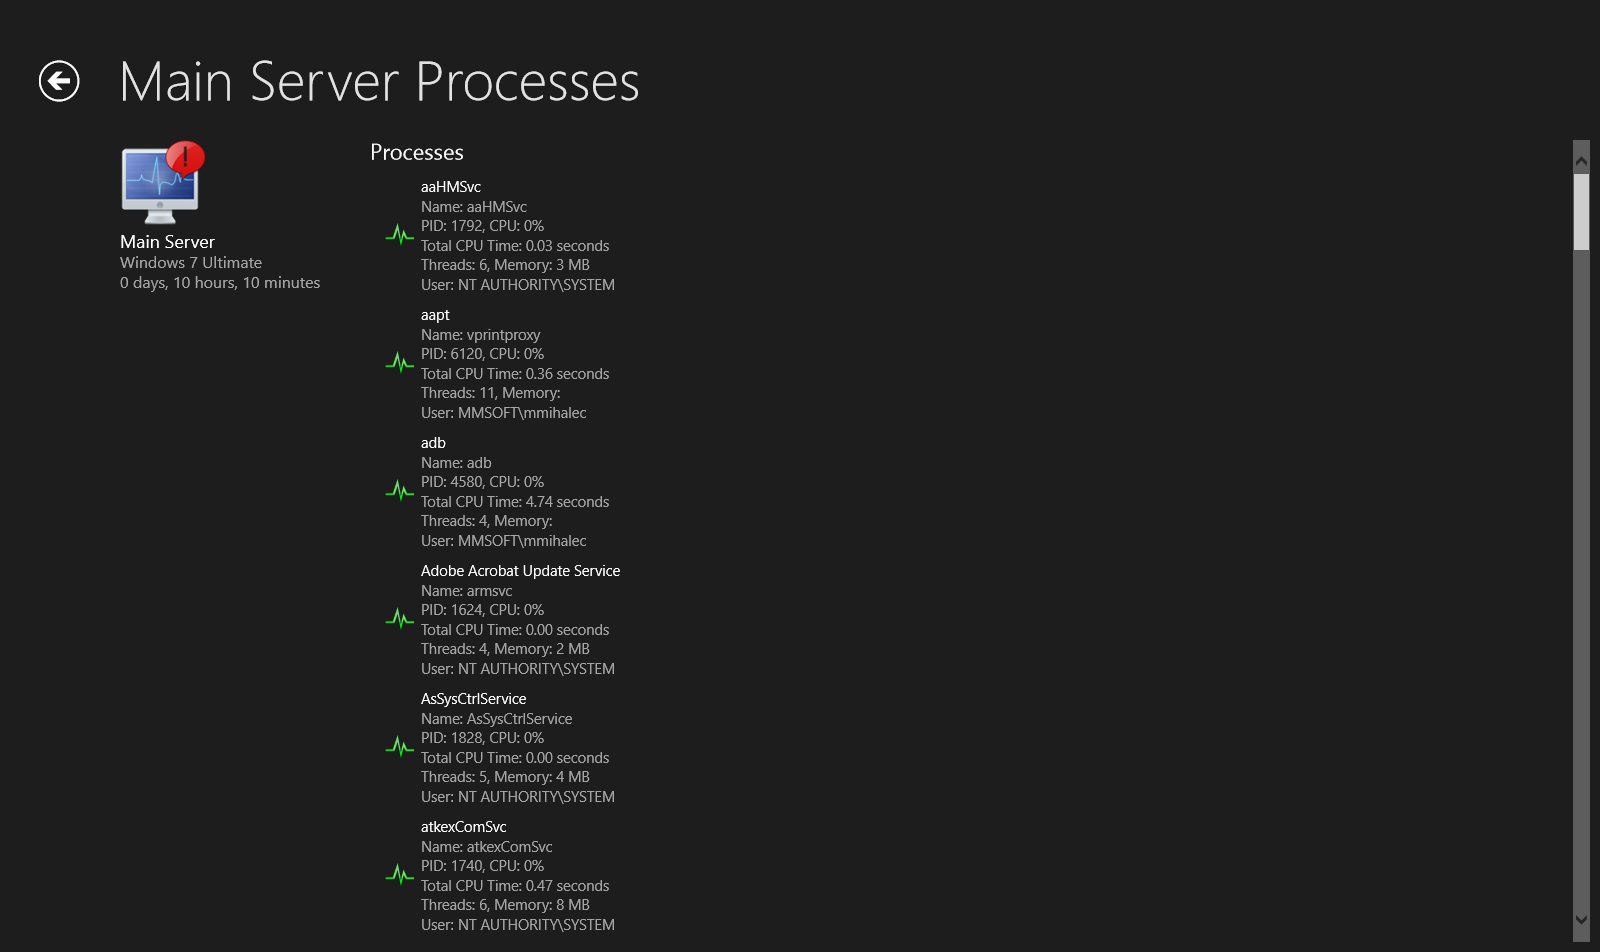 List of processes